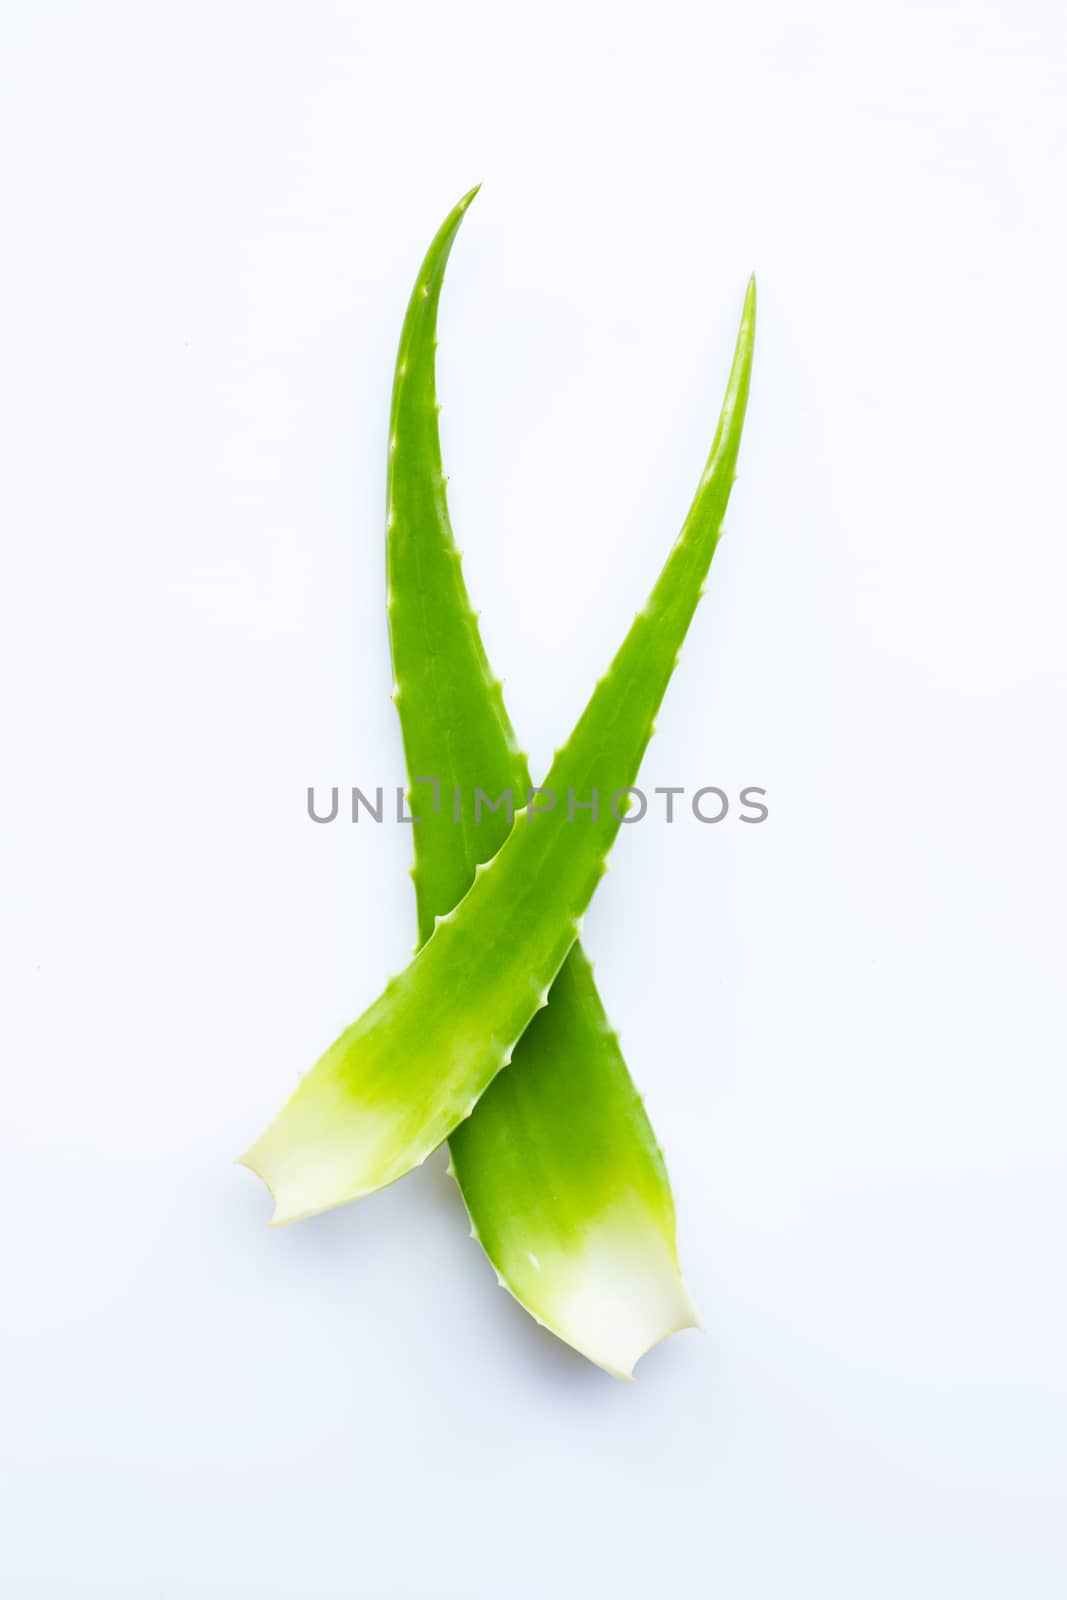 Aloe vera fresh leaves on white background. by Bowonpat